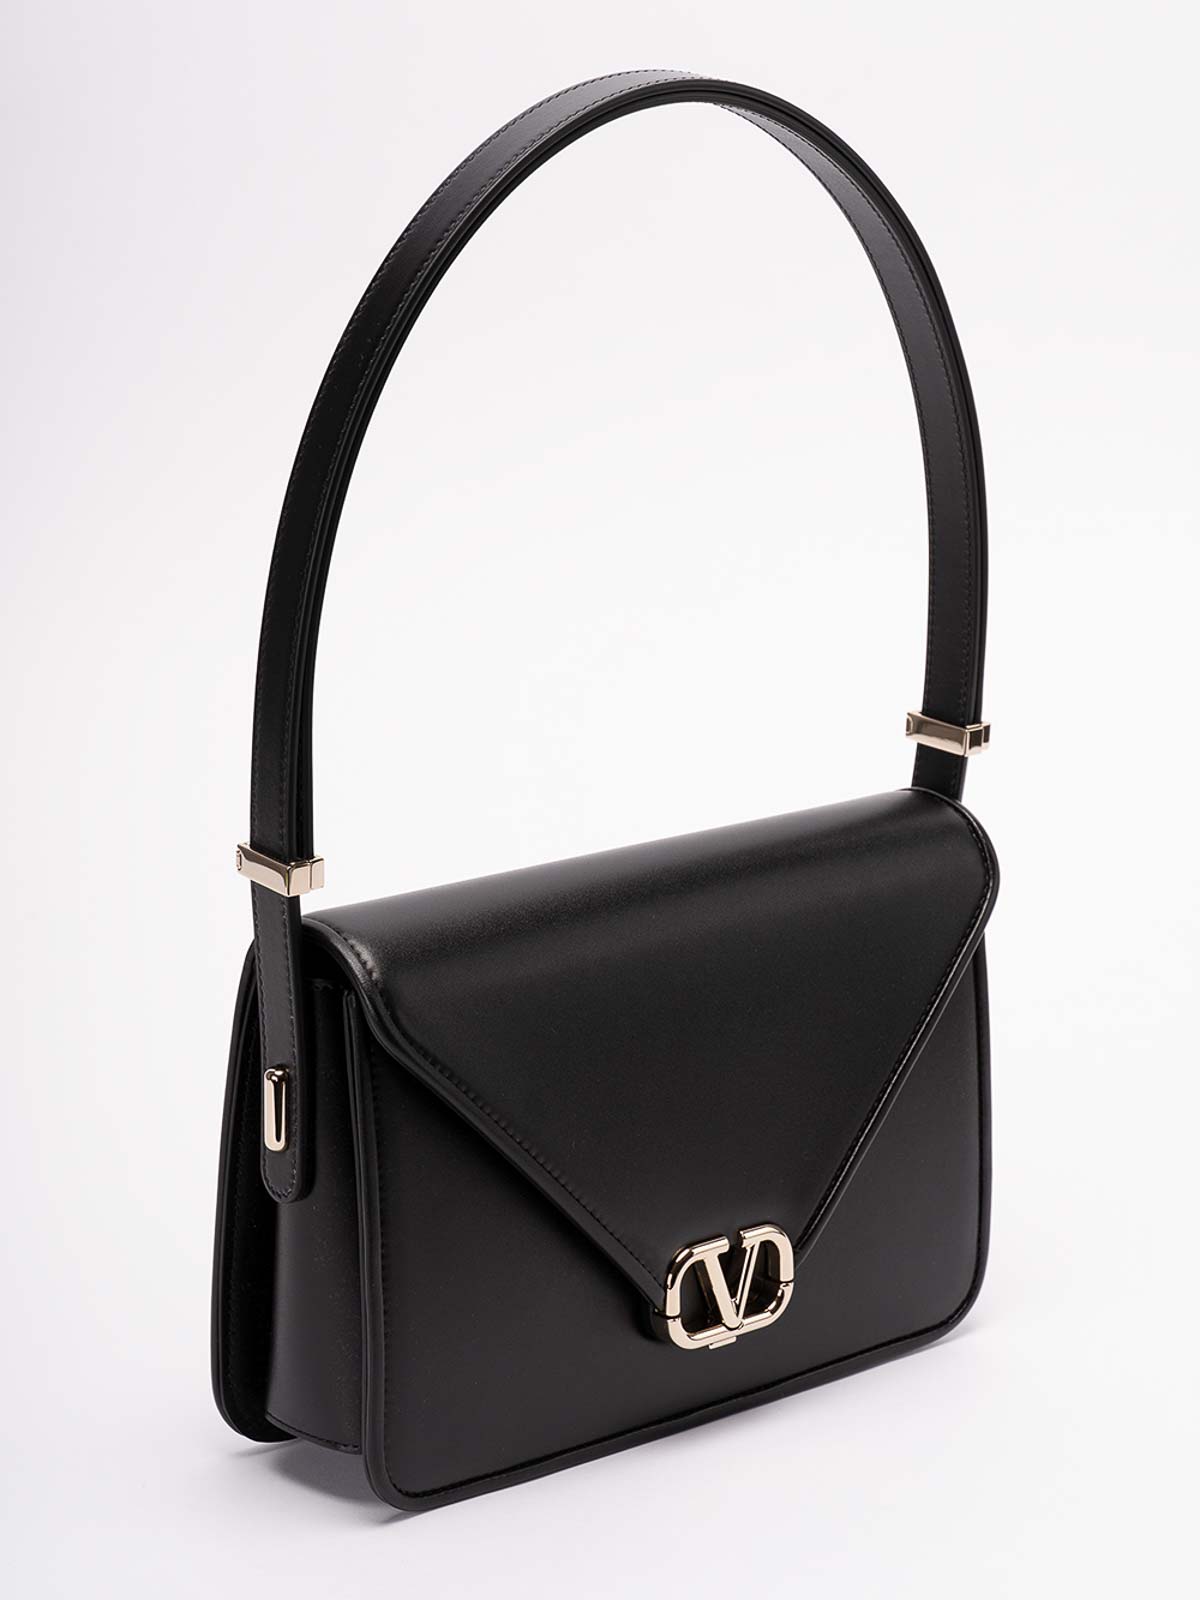 Letter Small Leather Shoulder Bag in Black - Valentino Garavani